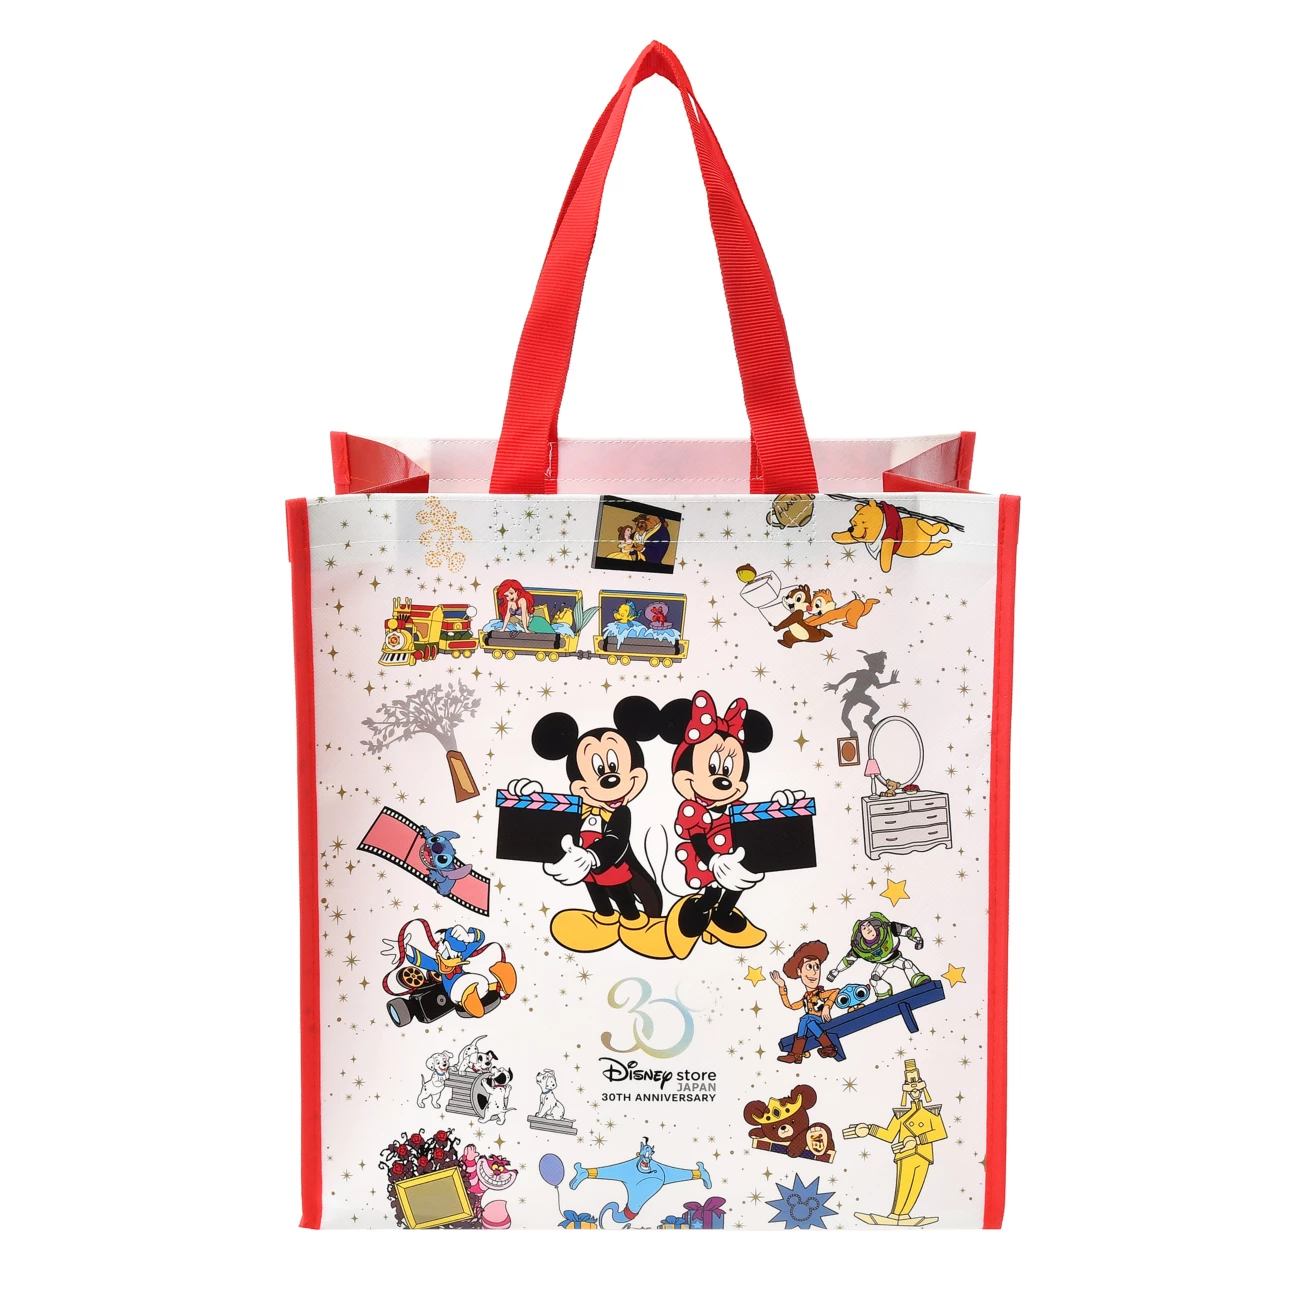 SDJ - Disney Store Japan 30TH Anniversary - Shopper bag